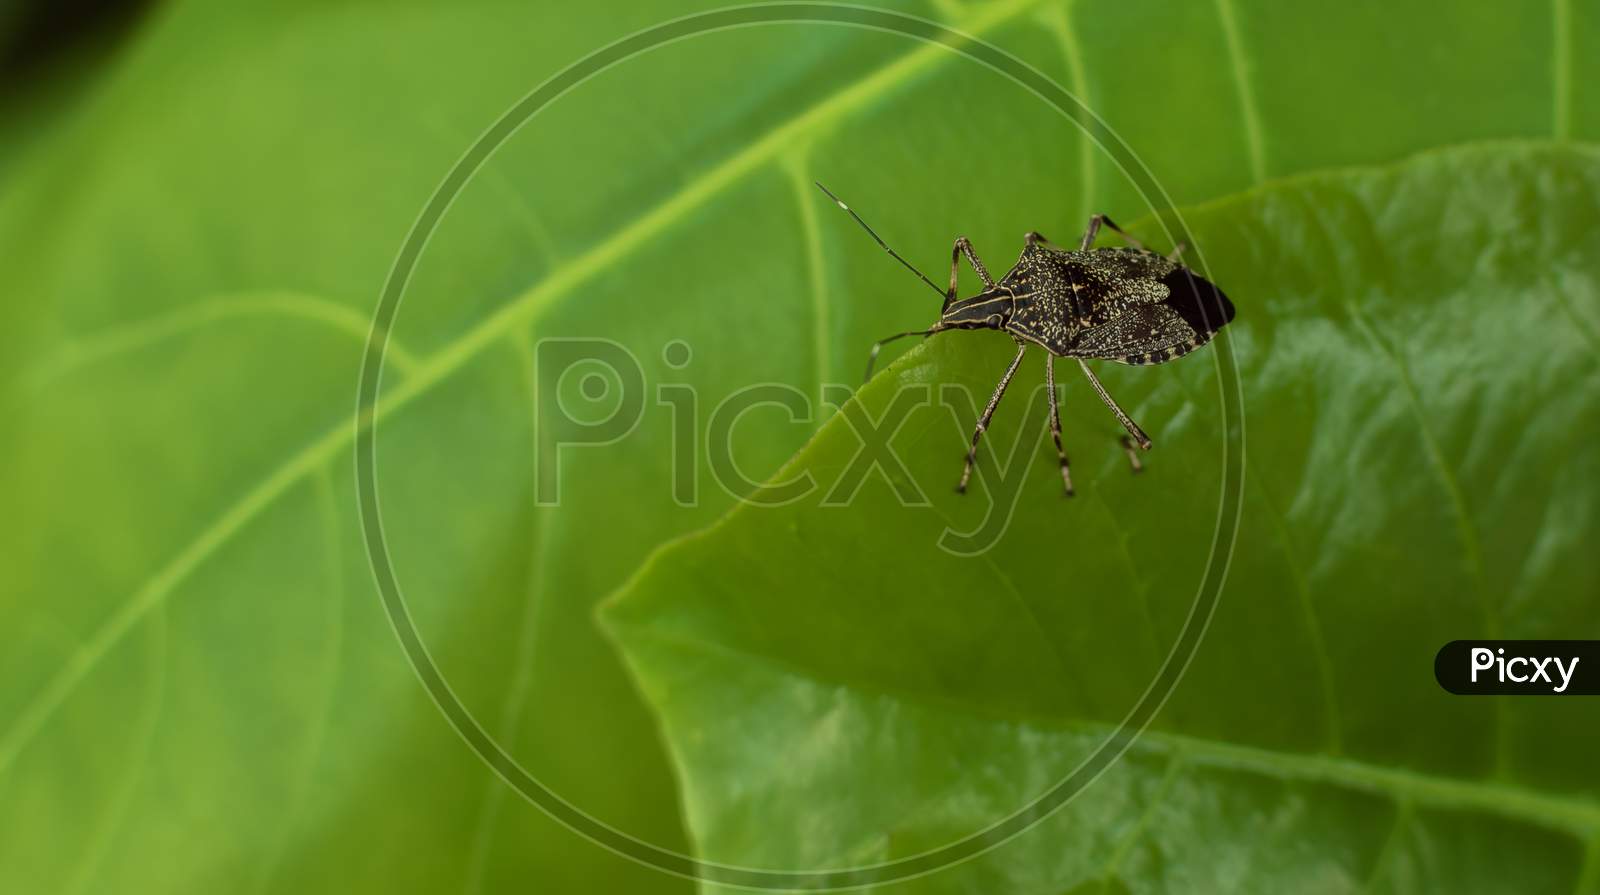 A Brown Marmorated Stink Bug (Halyomorpha halys)